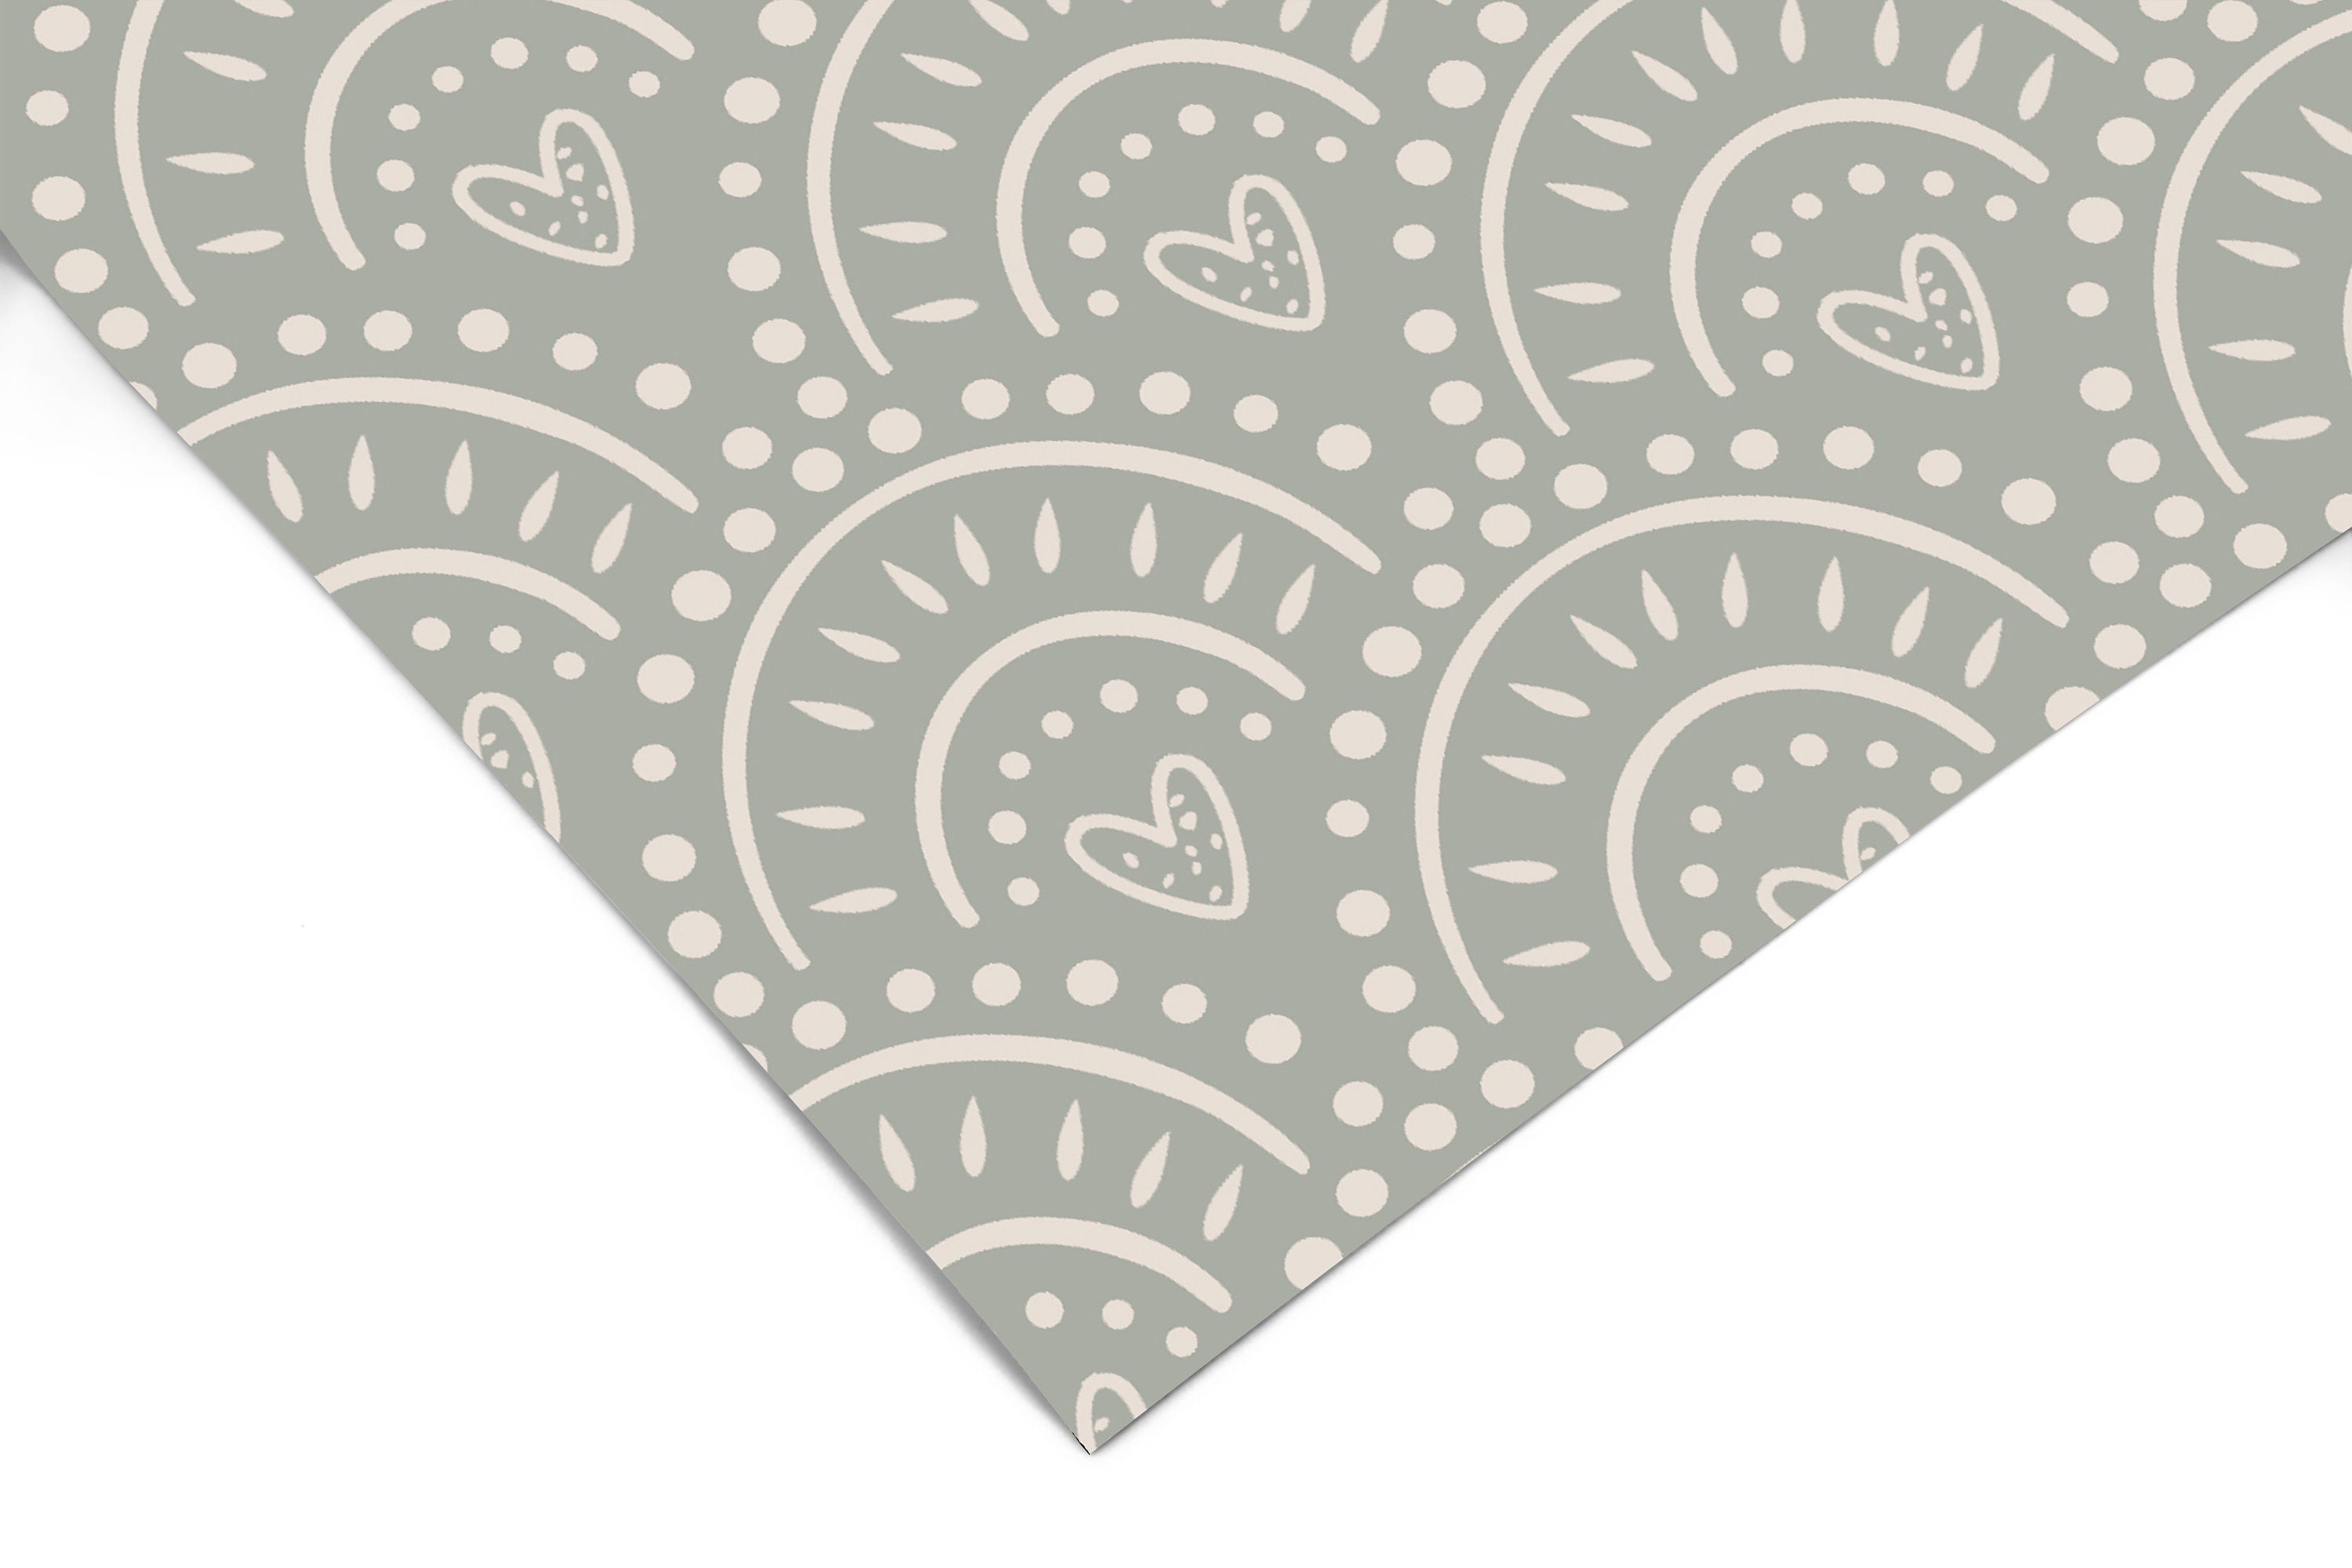 Boho Hearts Wallpaper | Girls Nursery Wallpaper | Kids Wallpaper | Childrens Wallpaper | Peel Stick Wallpaper | Removable Wallpaper | 3825 - JamesAndColors